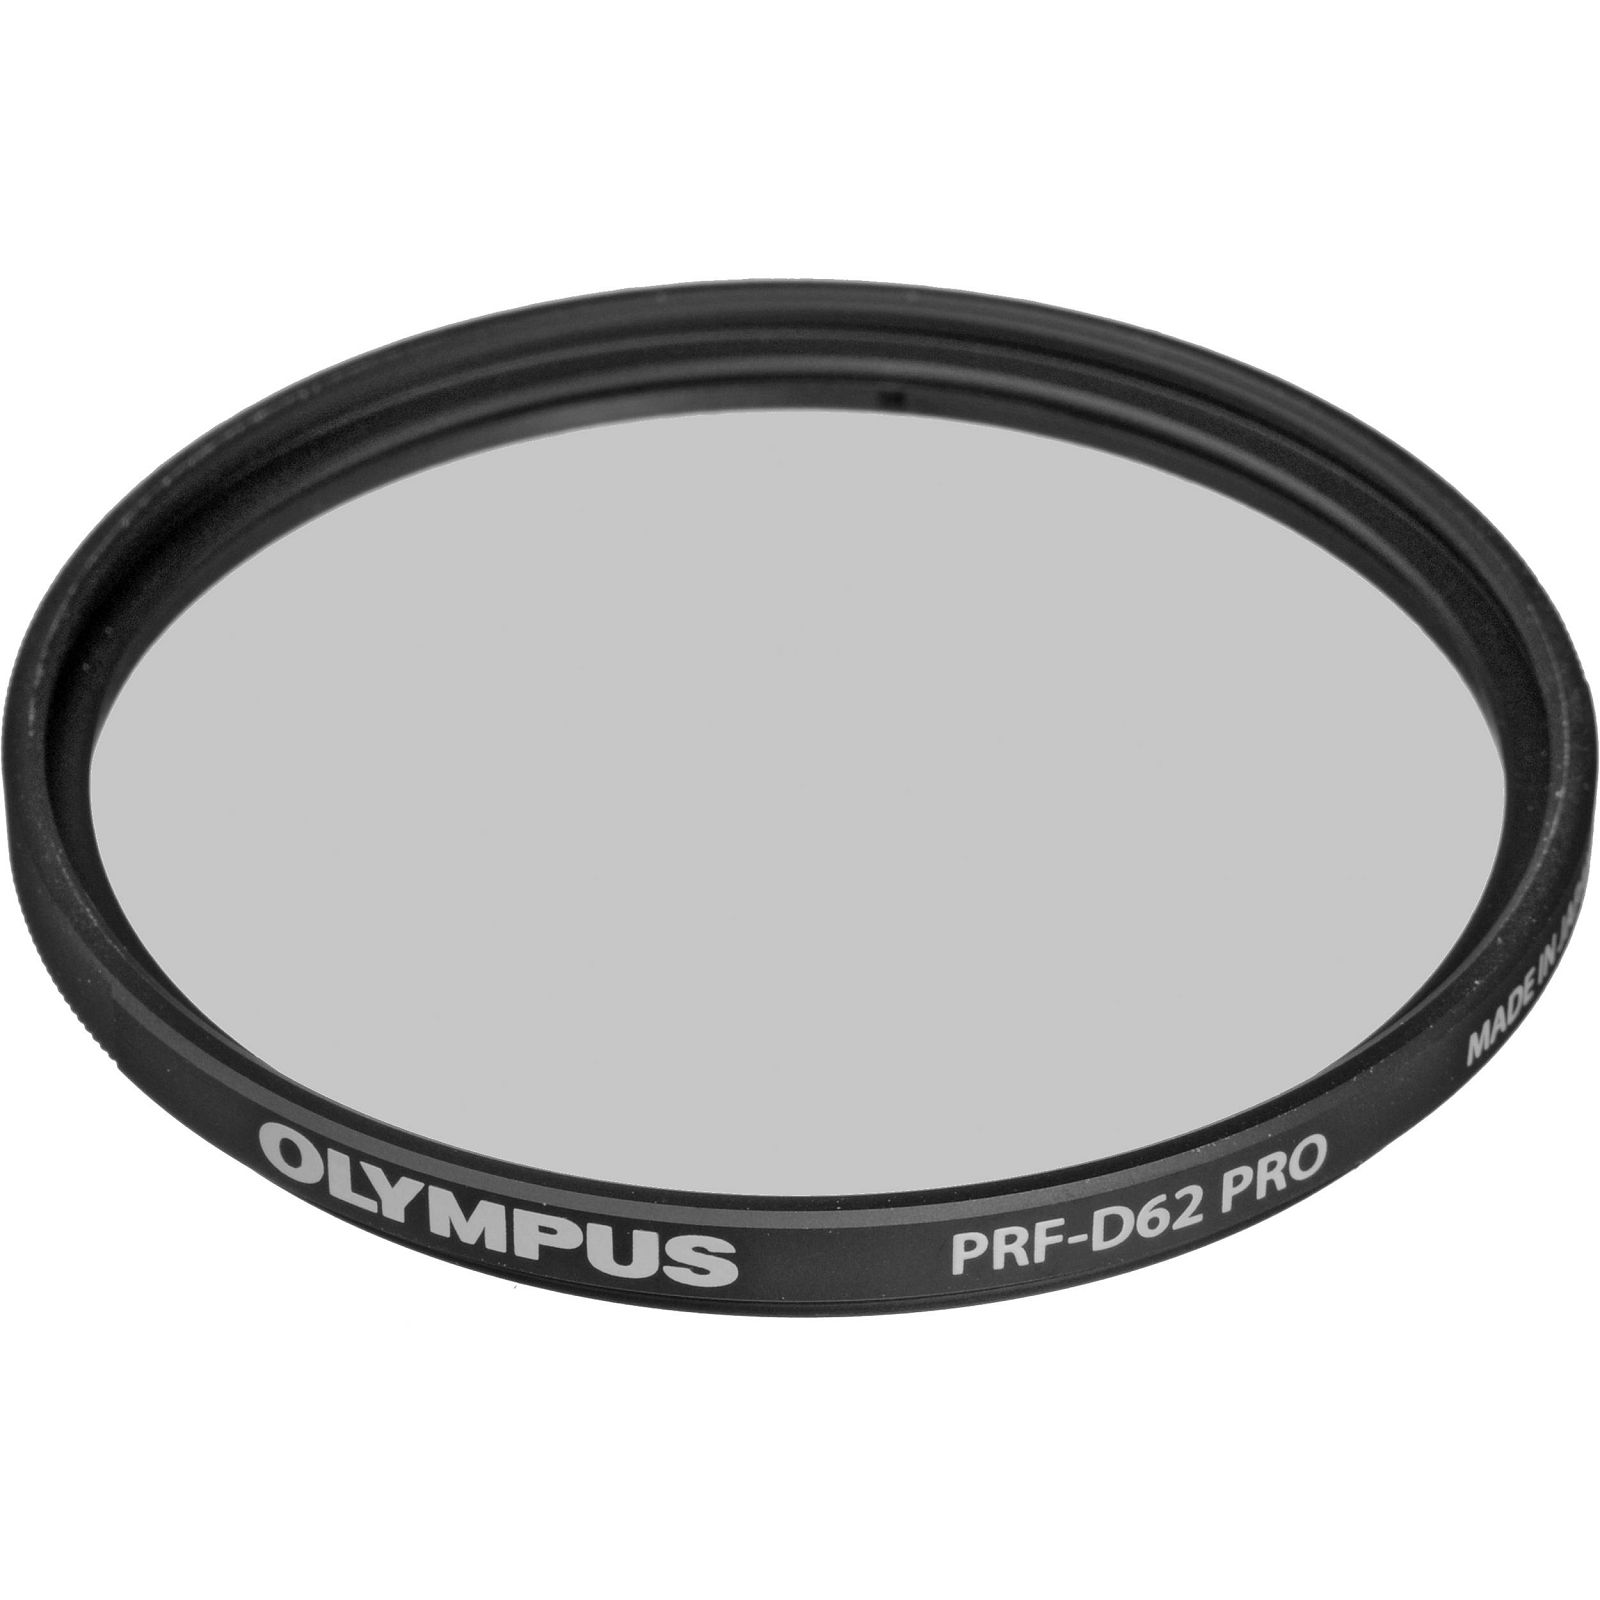 Olympus PRF-D62 PRO Protection Filter V652012BW000